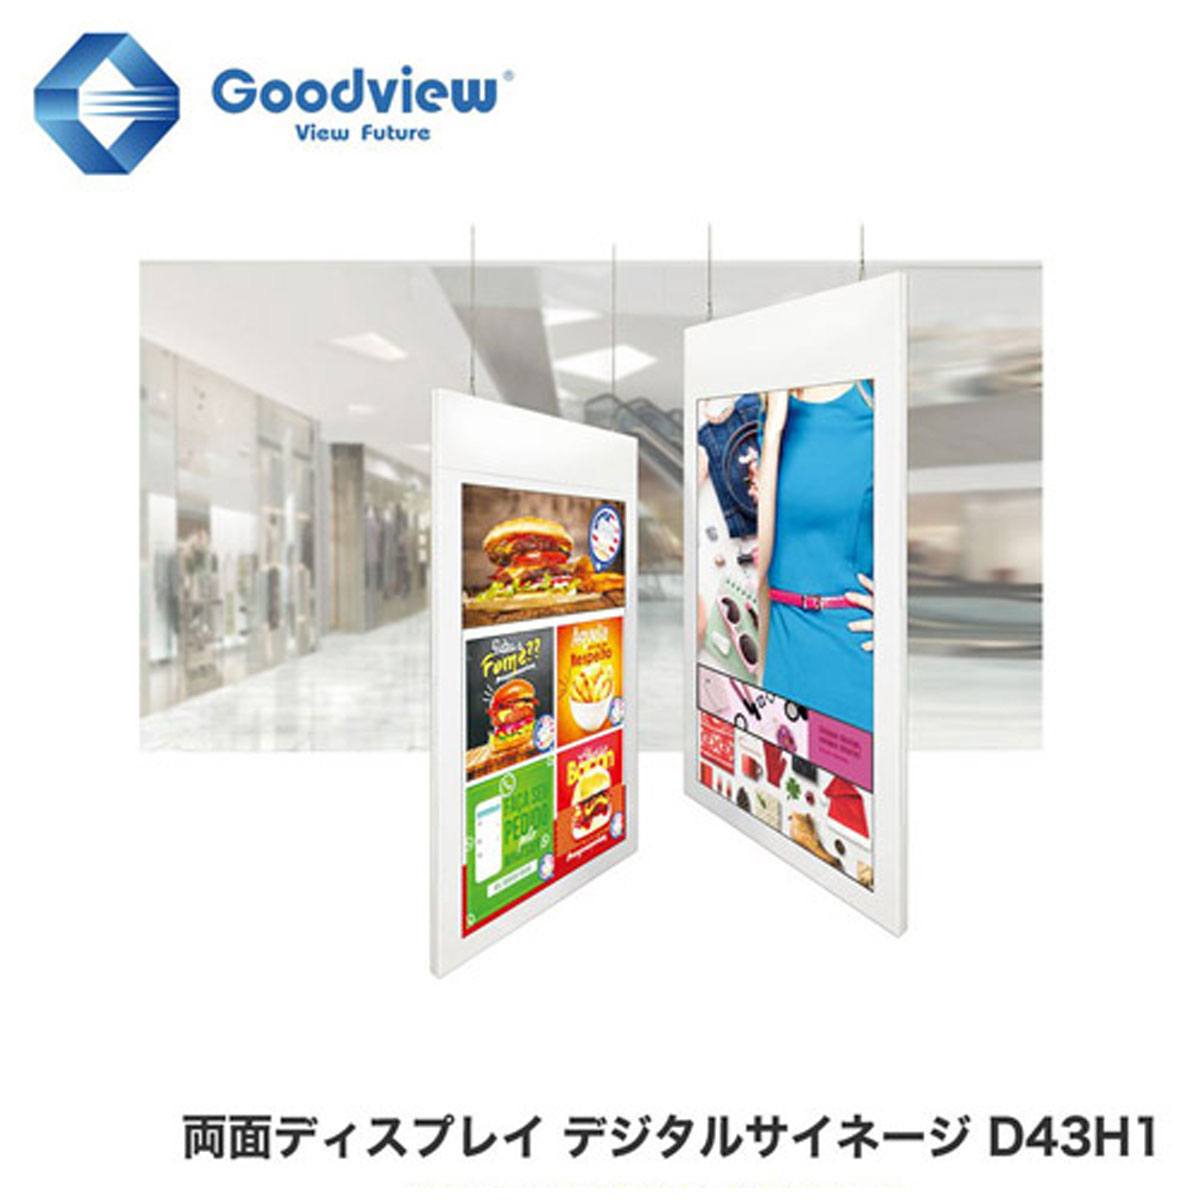 Goodview デジタルサイネージ 両面サイネージ 800/450カンデラ 43型【D43H1】